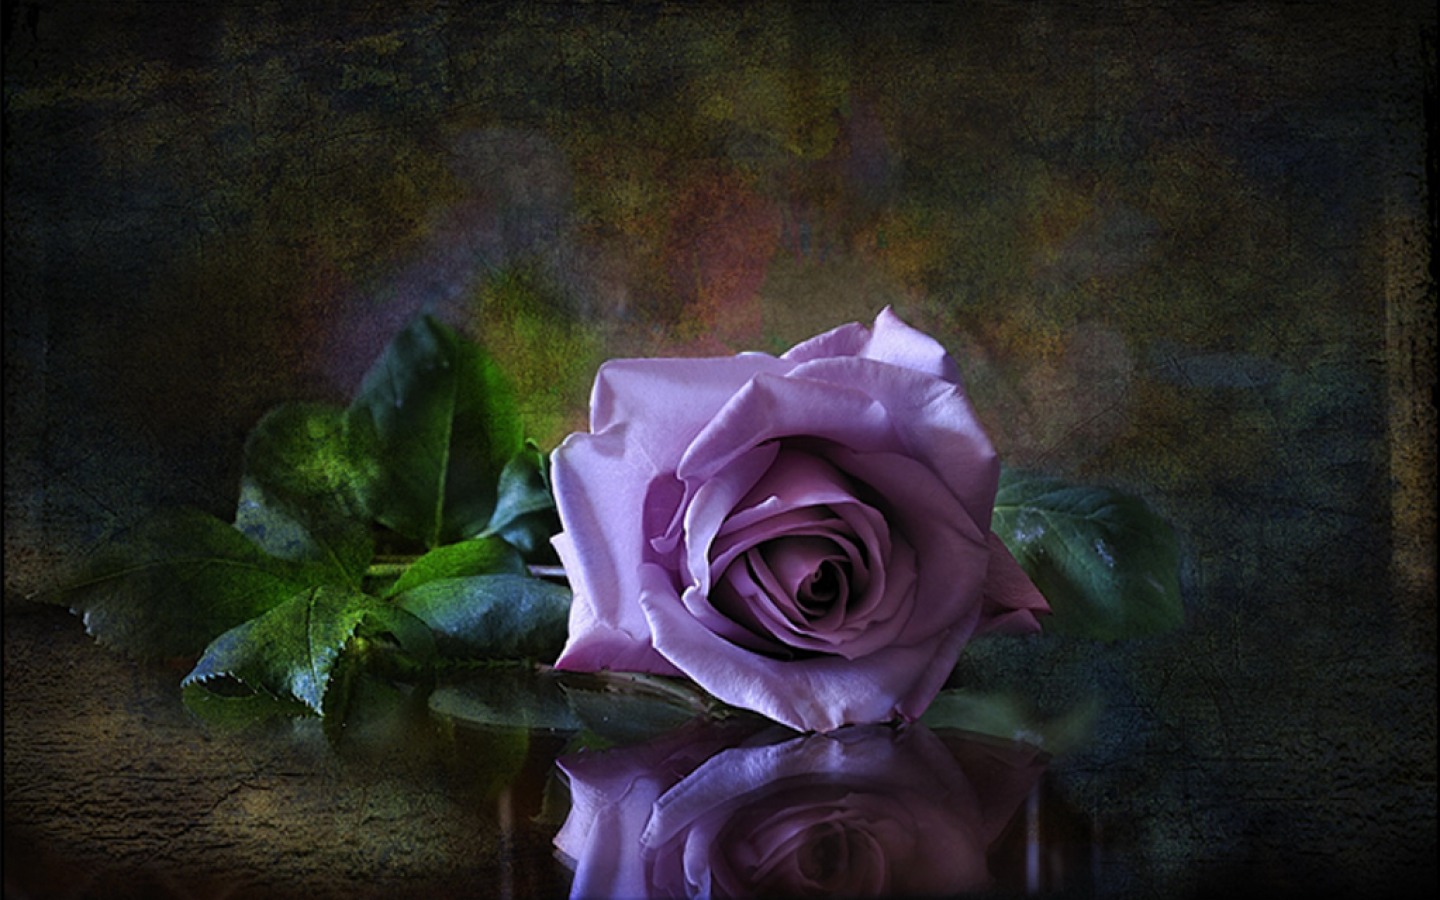 earth, rose, close up, flower, purple flower, stem